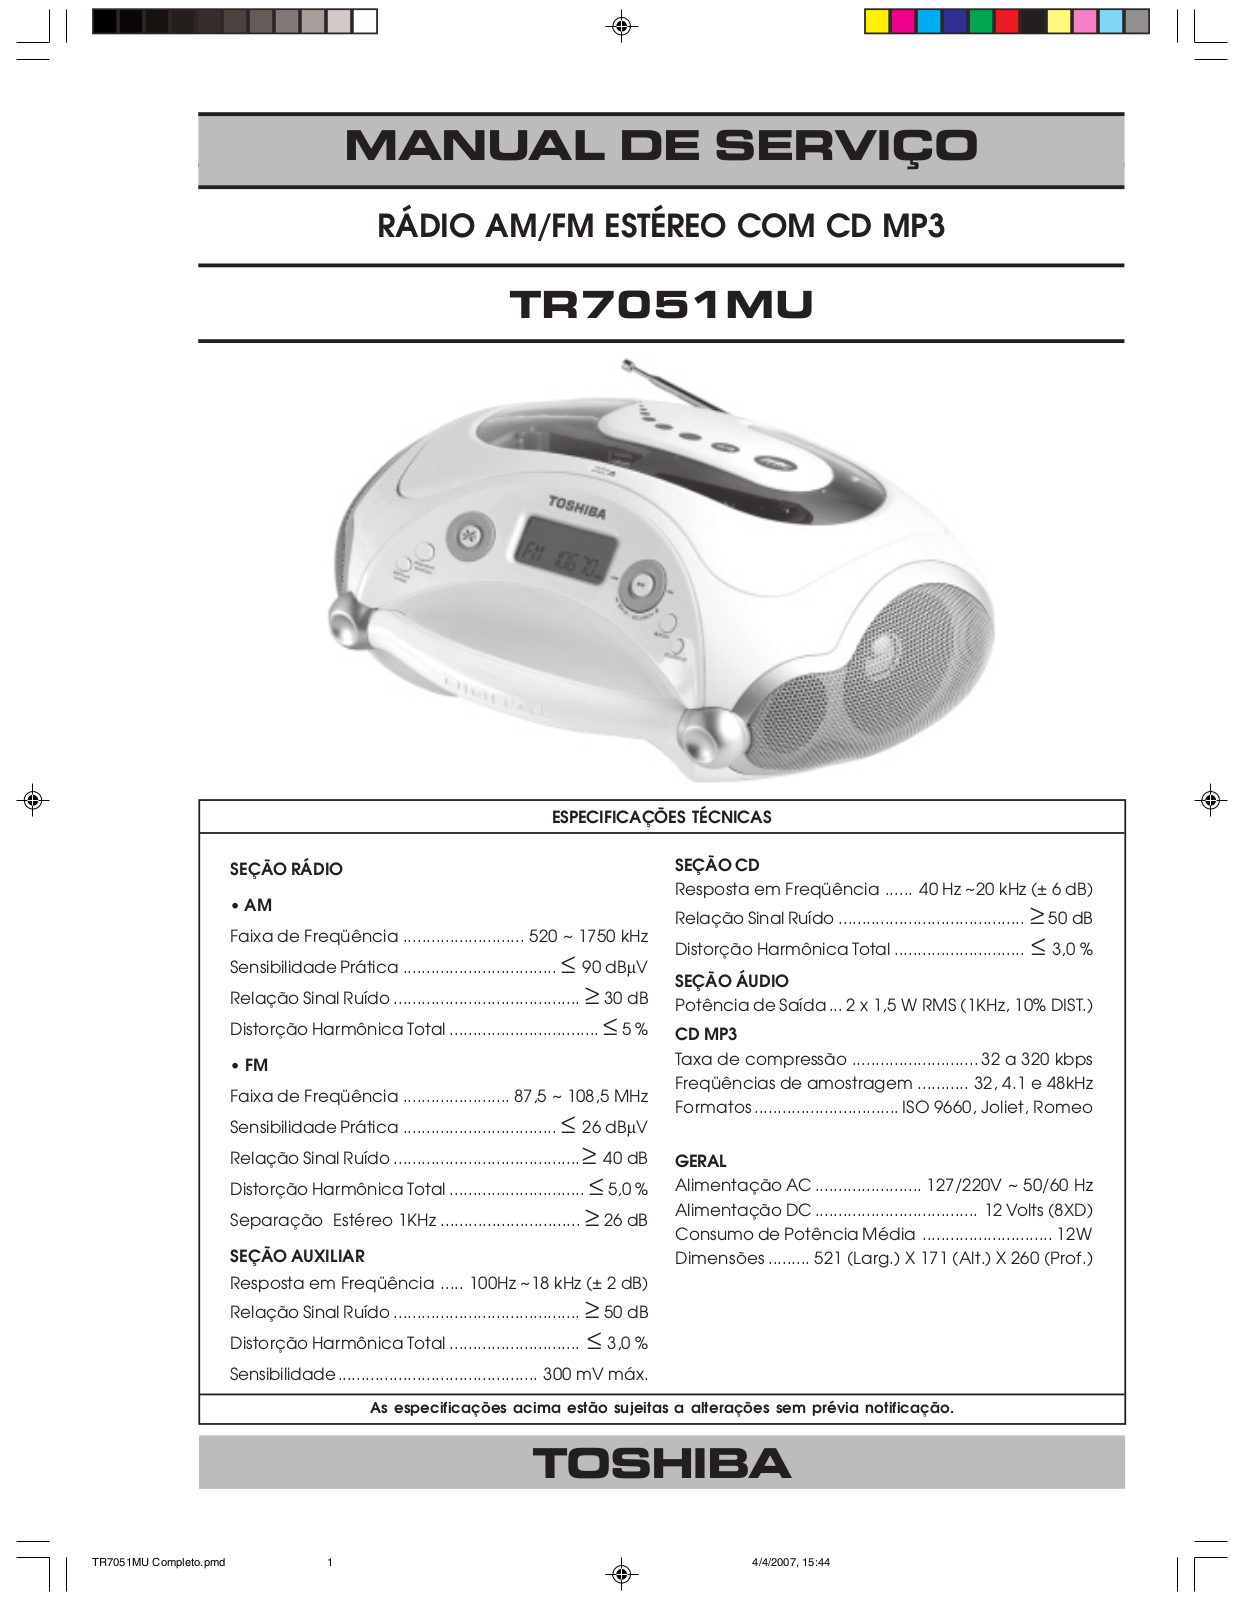 Toshiba TR-7051-MU Service manual